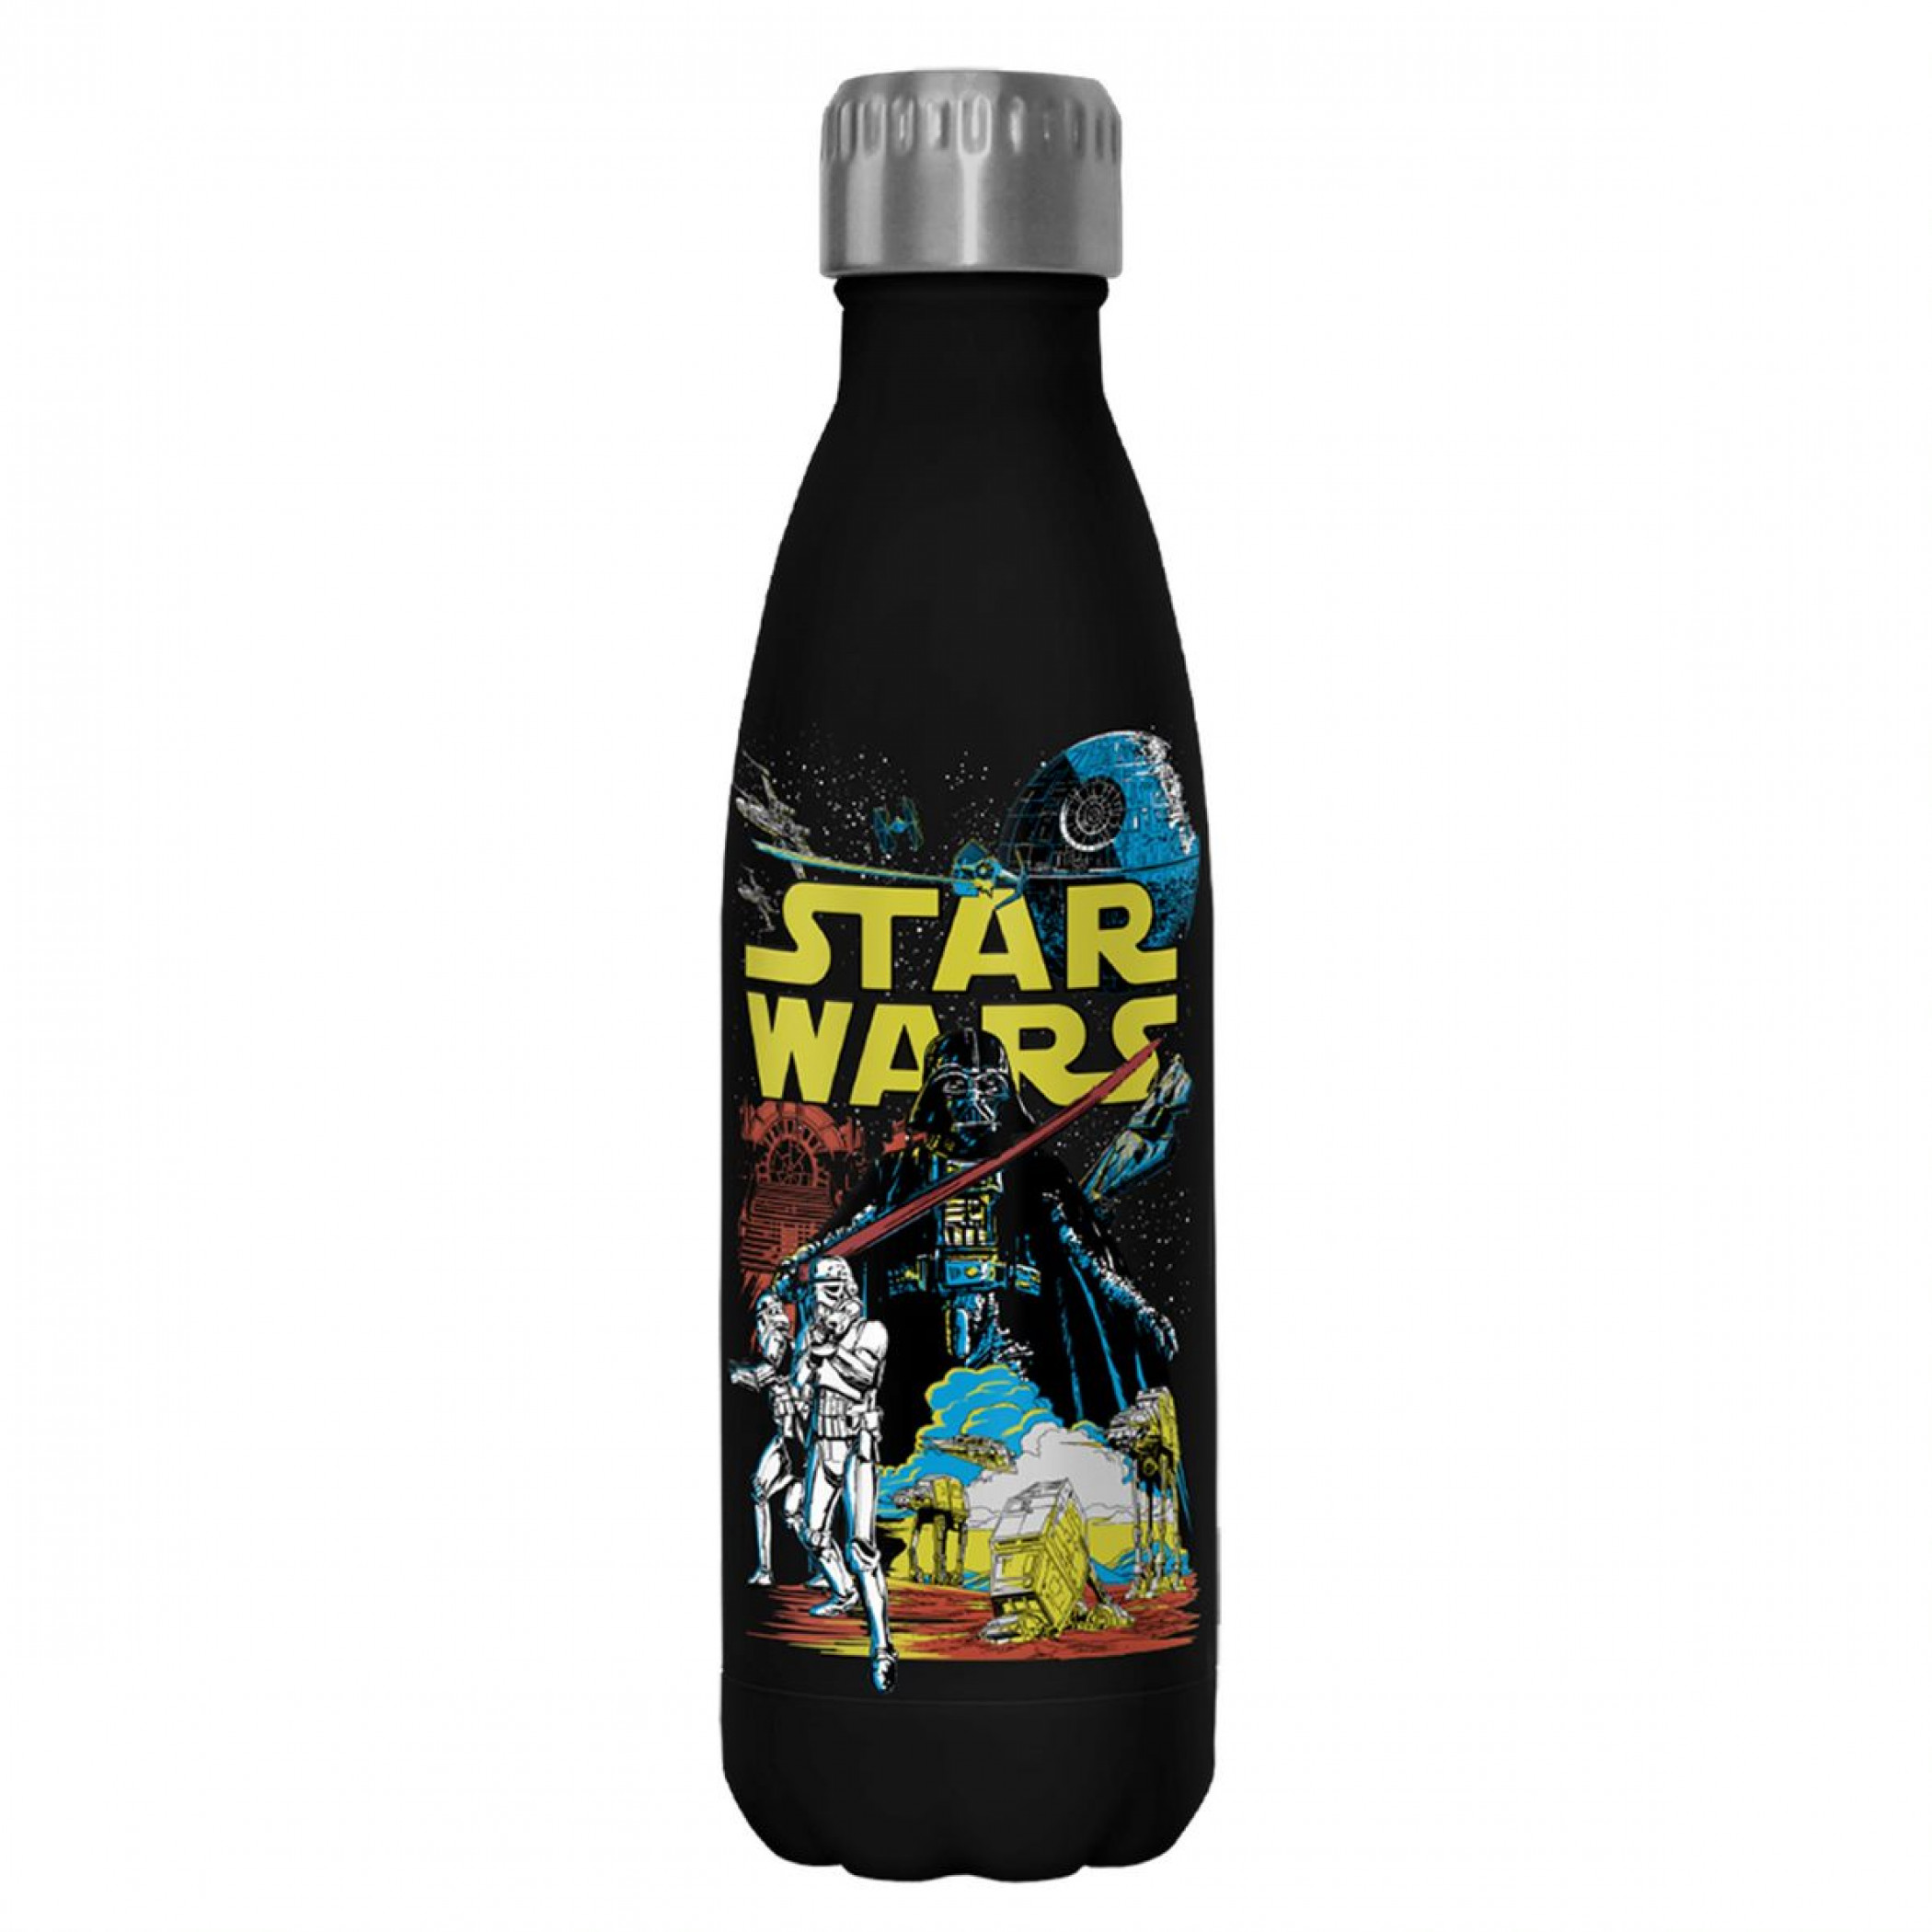 Star Wars Classic Comic Style Poster Art 17oz Steel Water Bottle